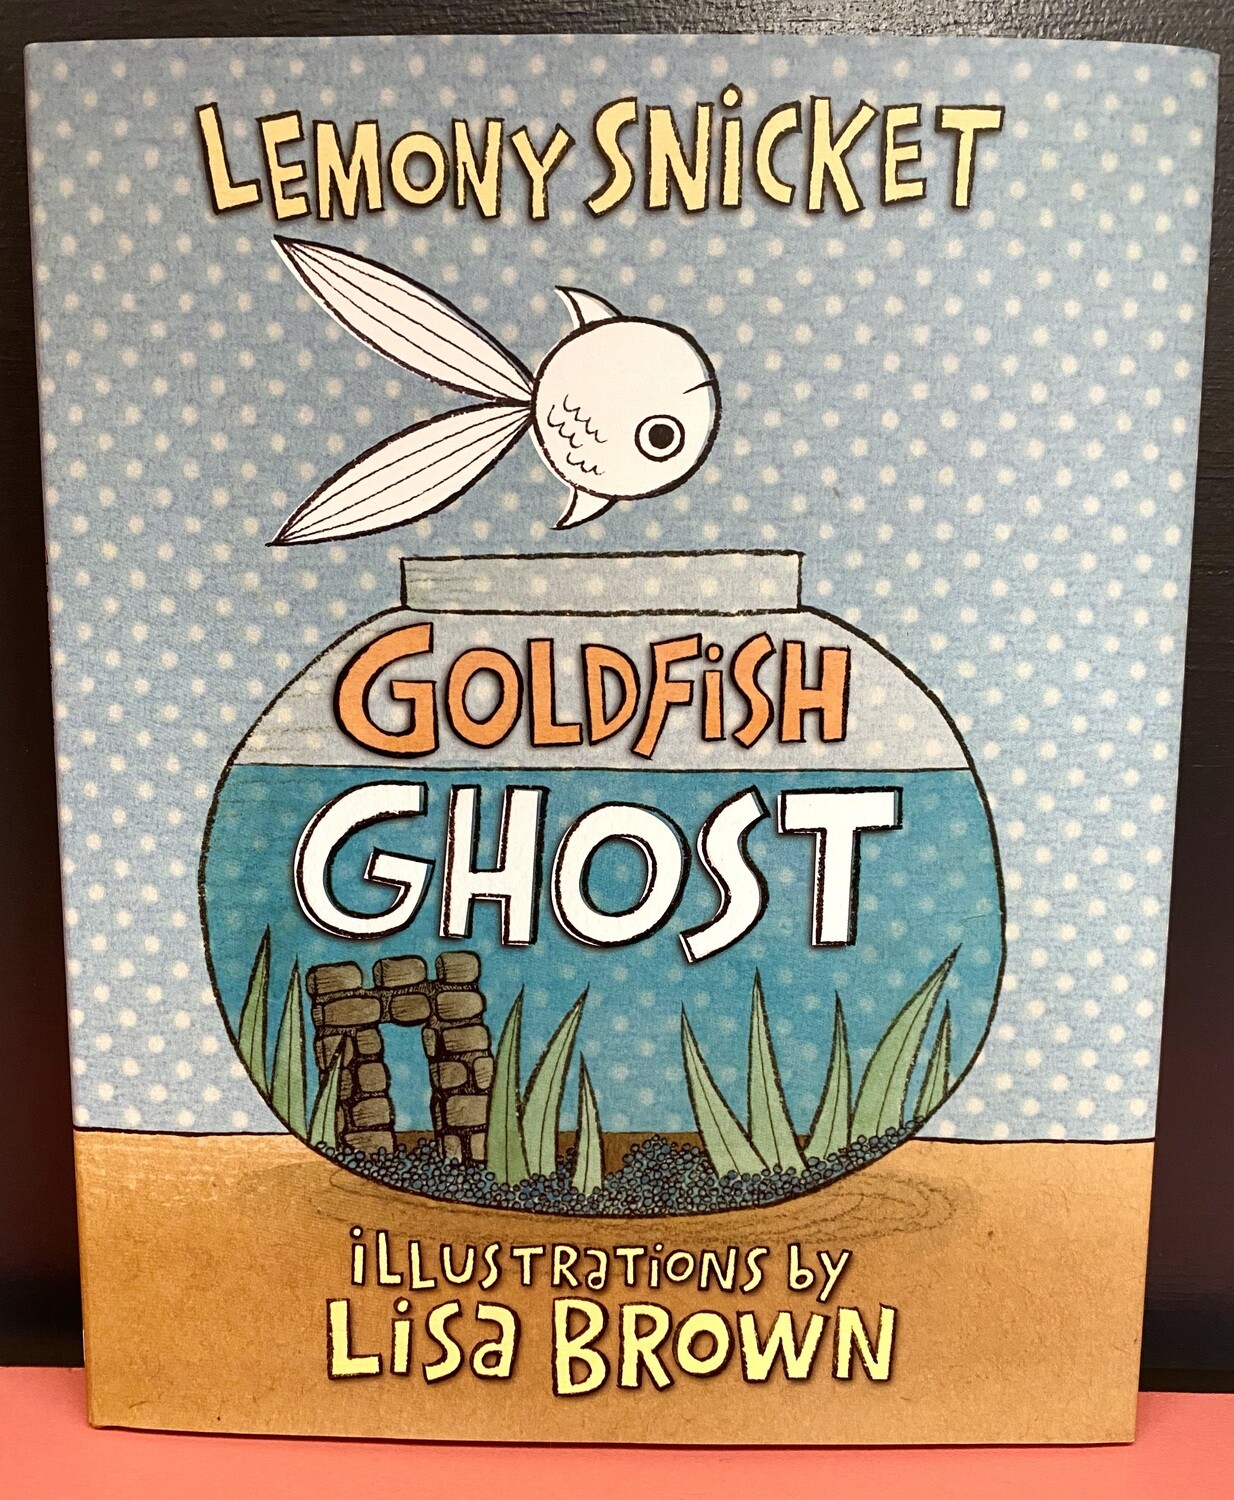 NEW - Goldfish Ghost, Lemony Snicket, Lisa Brown